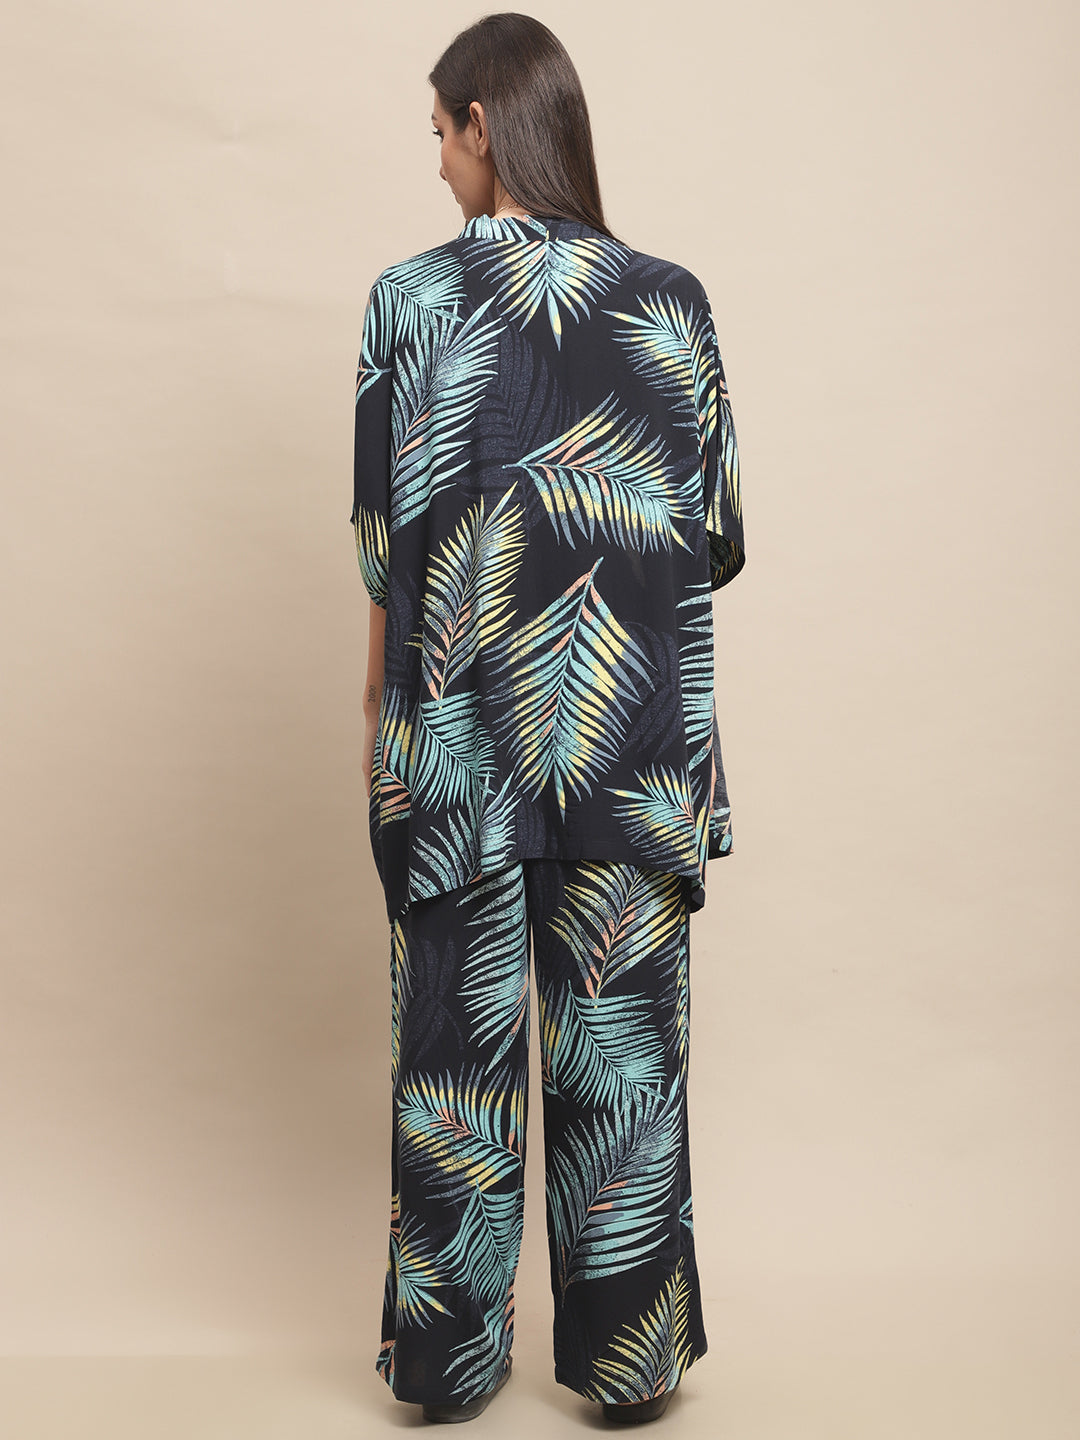 Navy Color Tropical Printed Viscose Rayon 3 pcs Beachwear Coverup Set Pyjama,Top and Robe For Woman Claura Designs Pvt. Ltd. Beachwear Beachwear, Beachwear_size, Coverup, Navy Blue, Swimwear, tropical